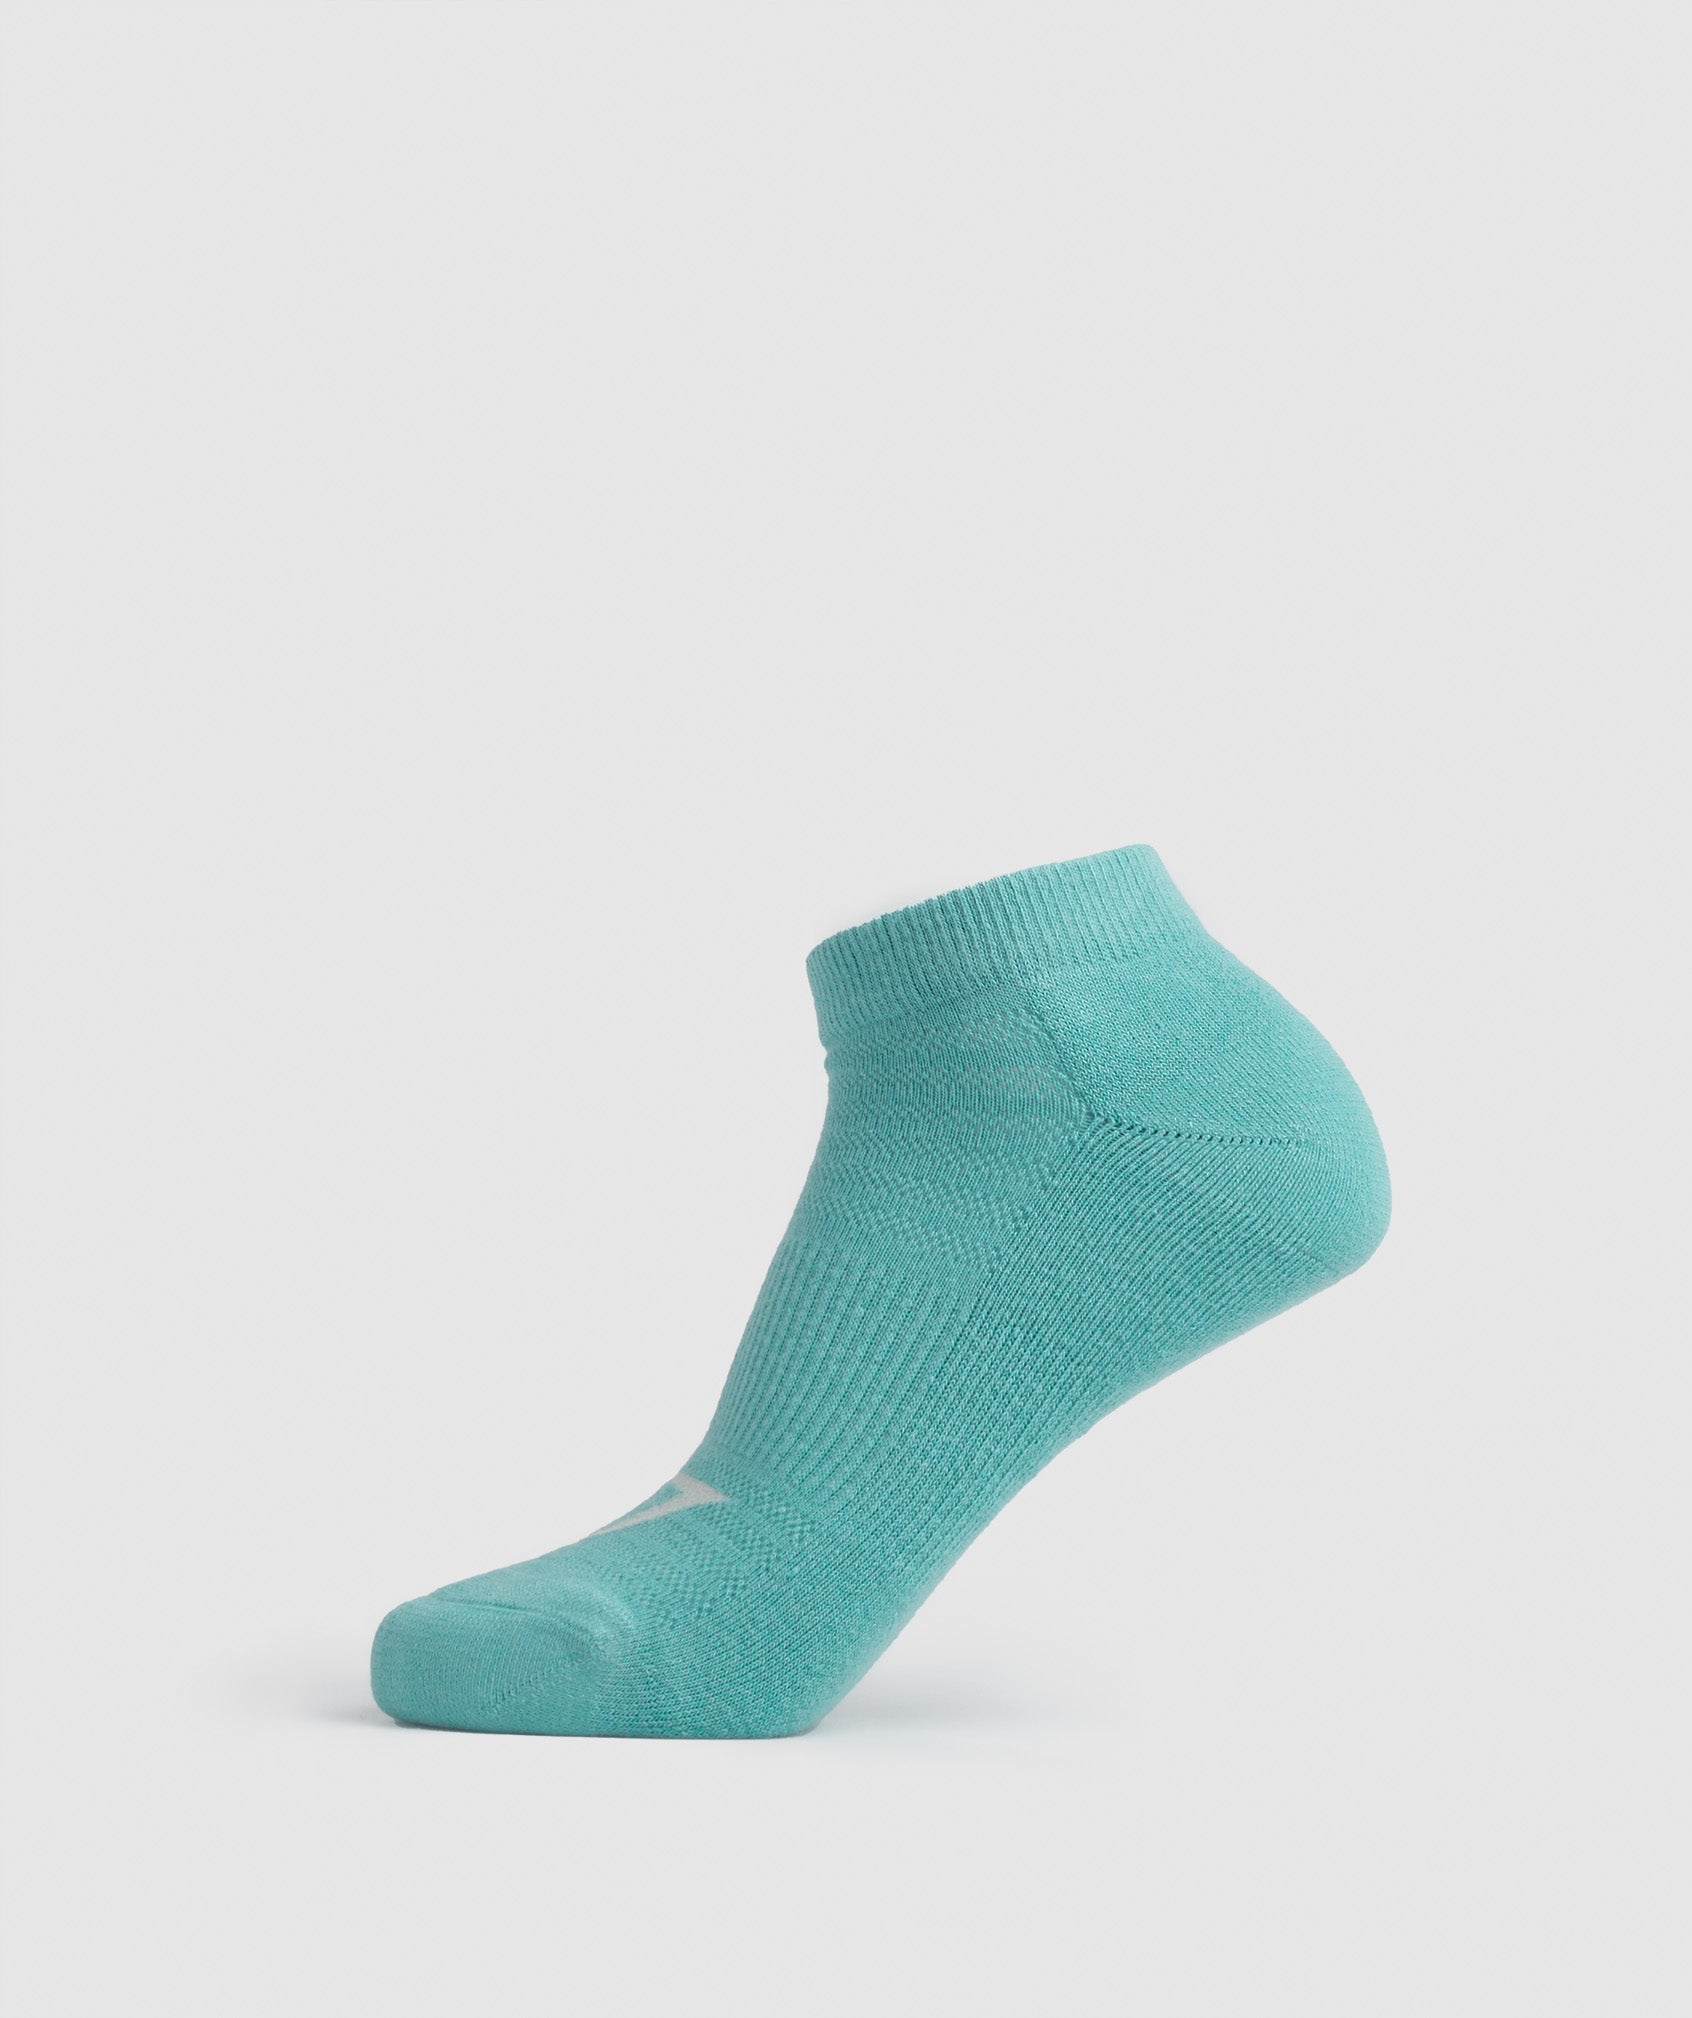 Ankle Socks 3pk in Blue/Jewel Green/Pebble Grey - view 4